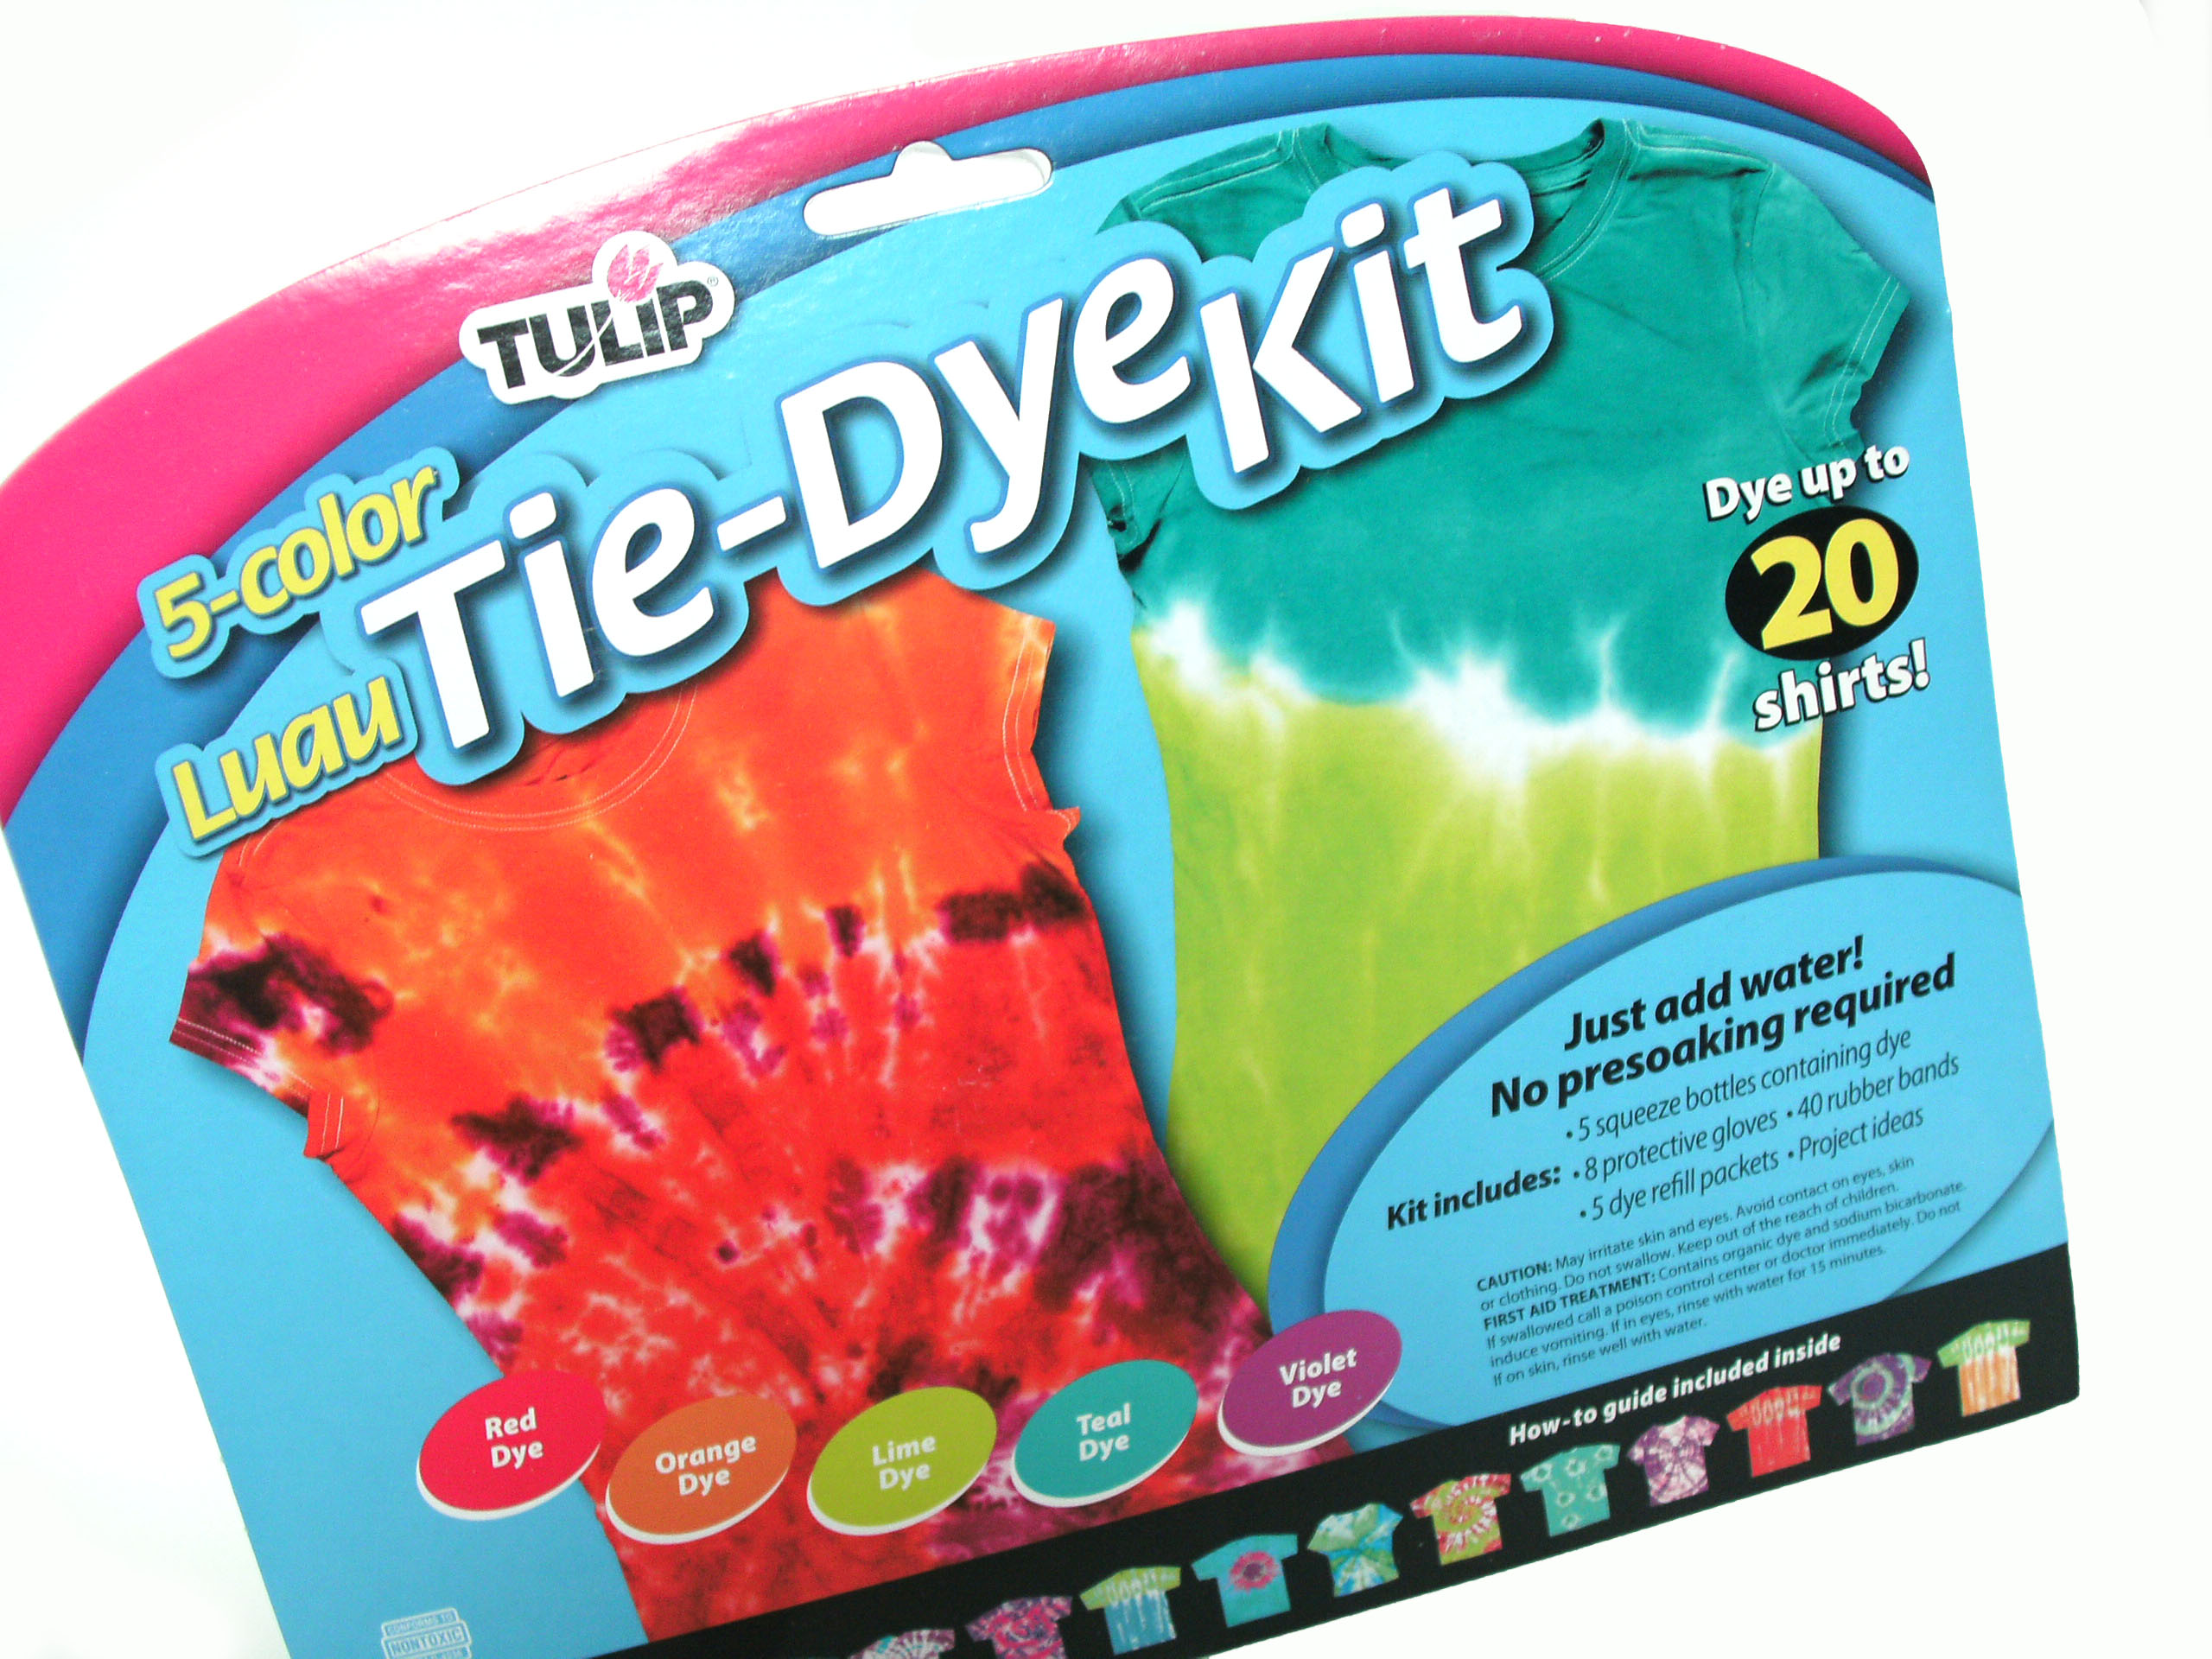 Tulip One-Step Luau Tie-Dye Kit